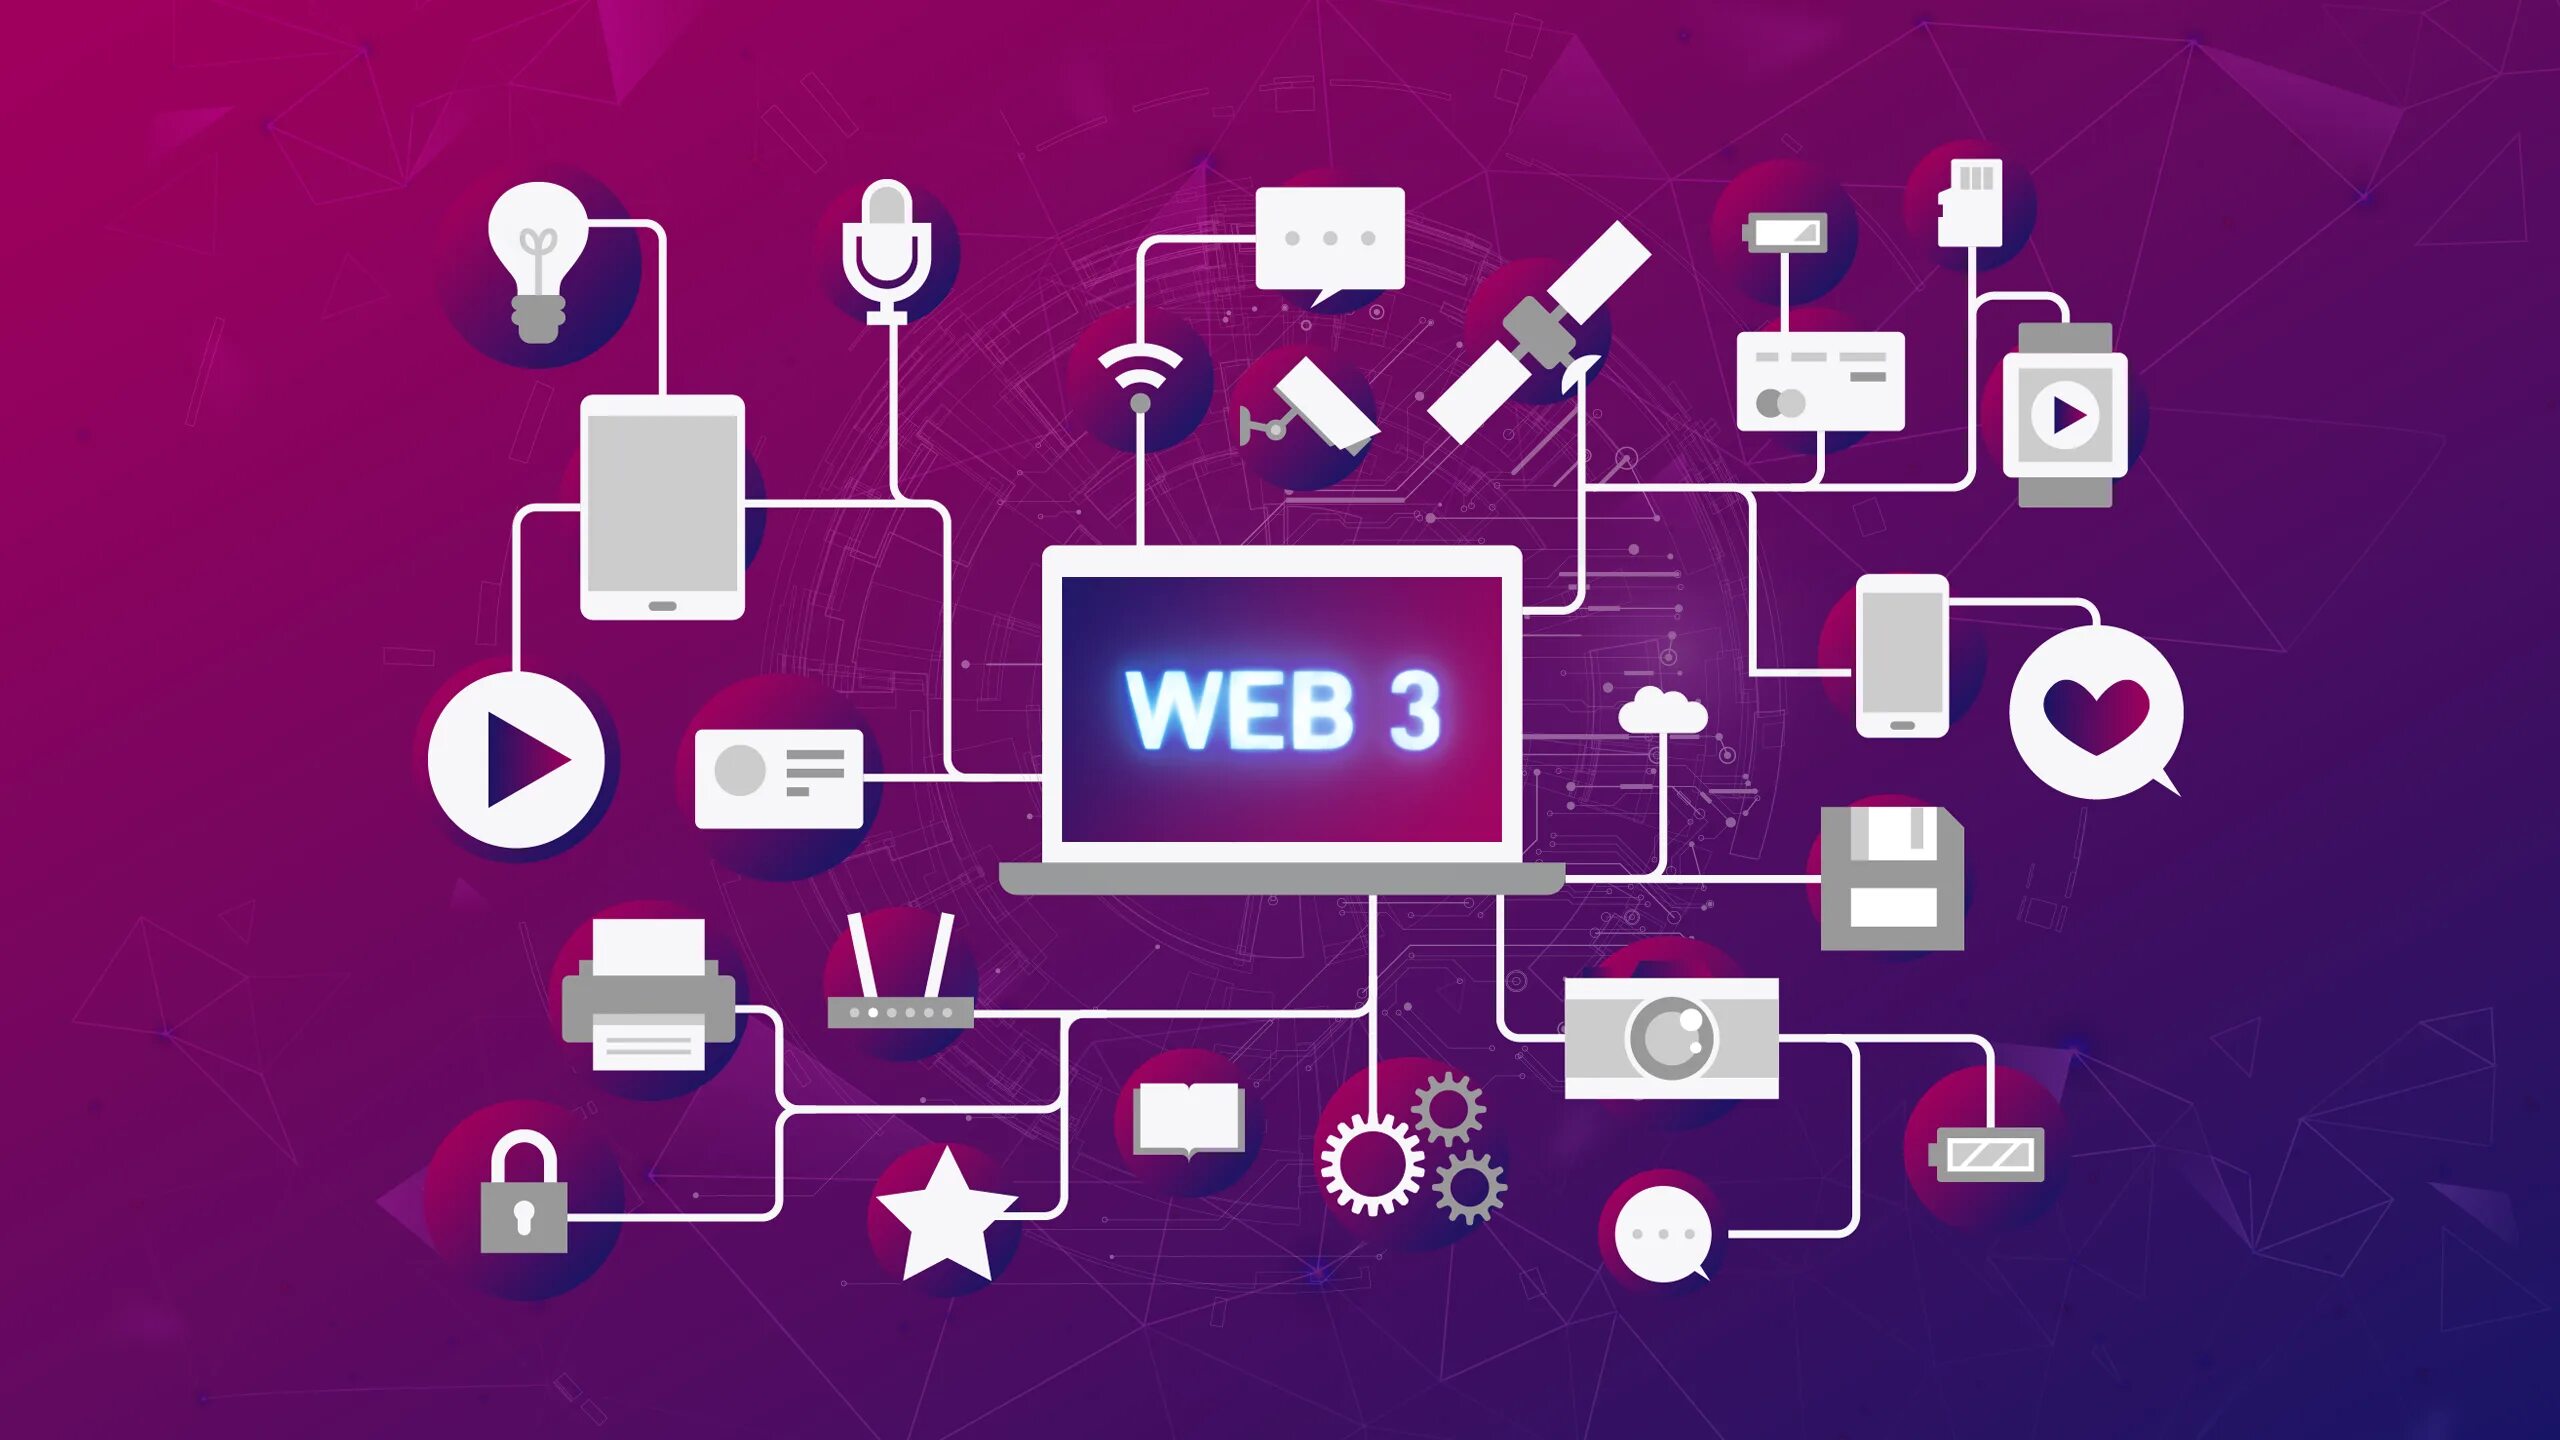 Web technologies is. Технология web 3.0. Web3. Инфраструктура web 3. Web 3.0 сайты.